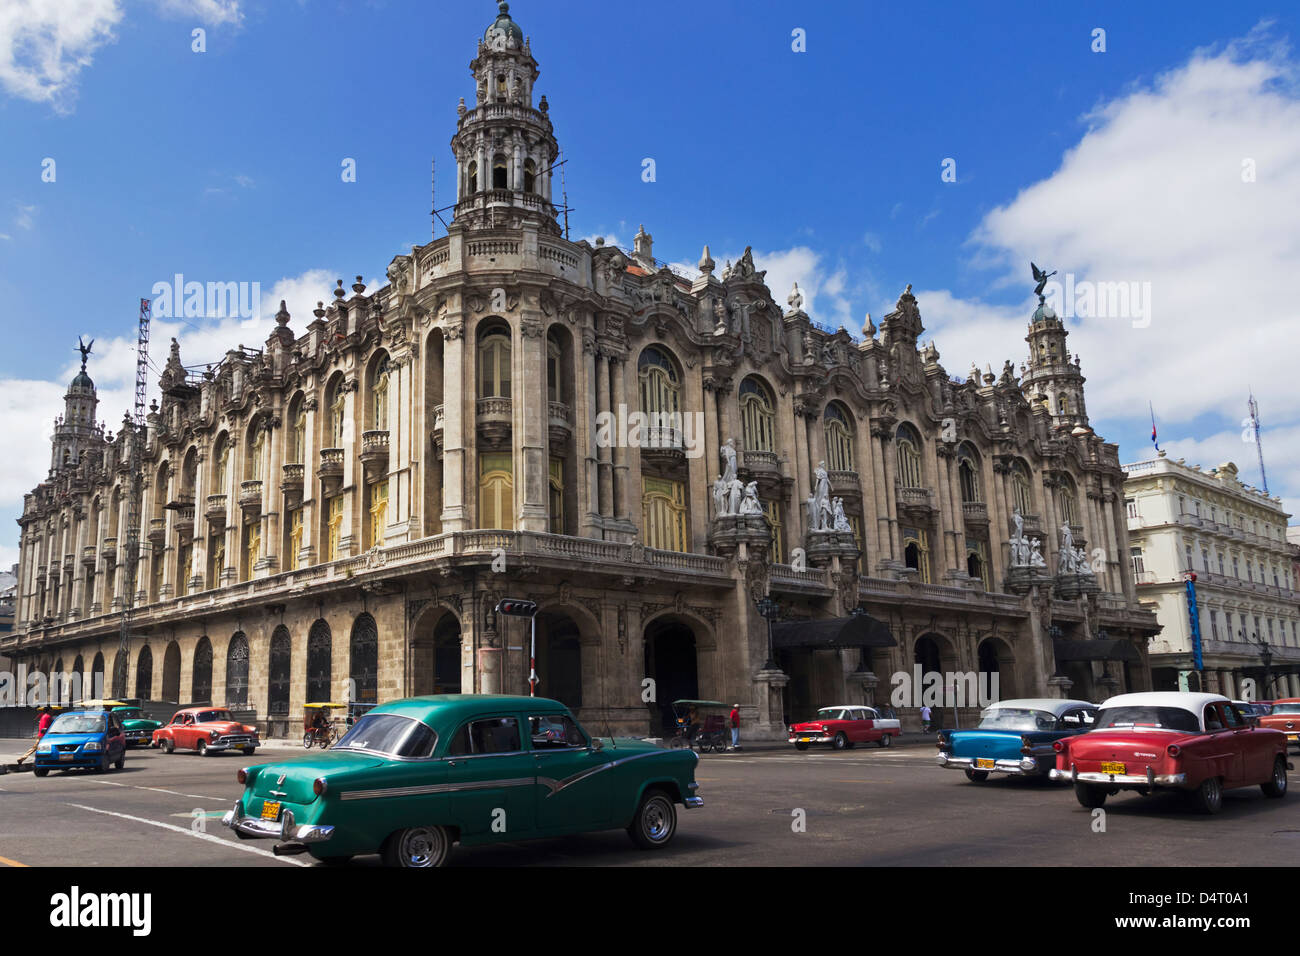 Gran Teatro de la Habana (National Theatre) Parque Central Havana Cuba Stock Photo